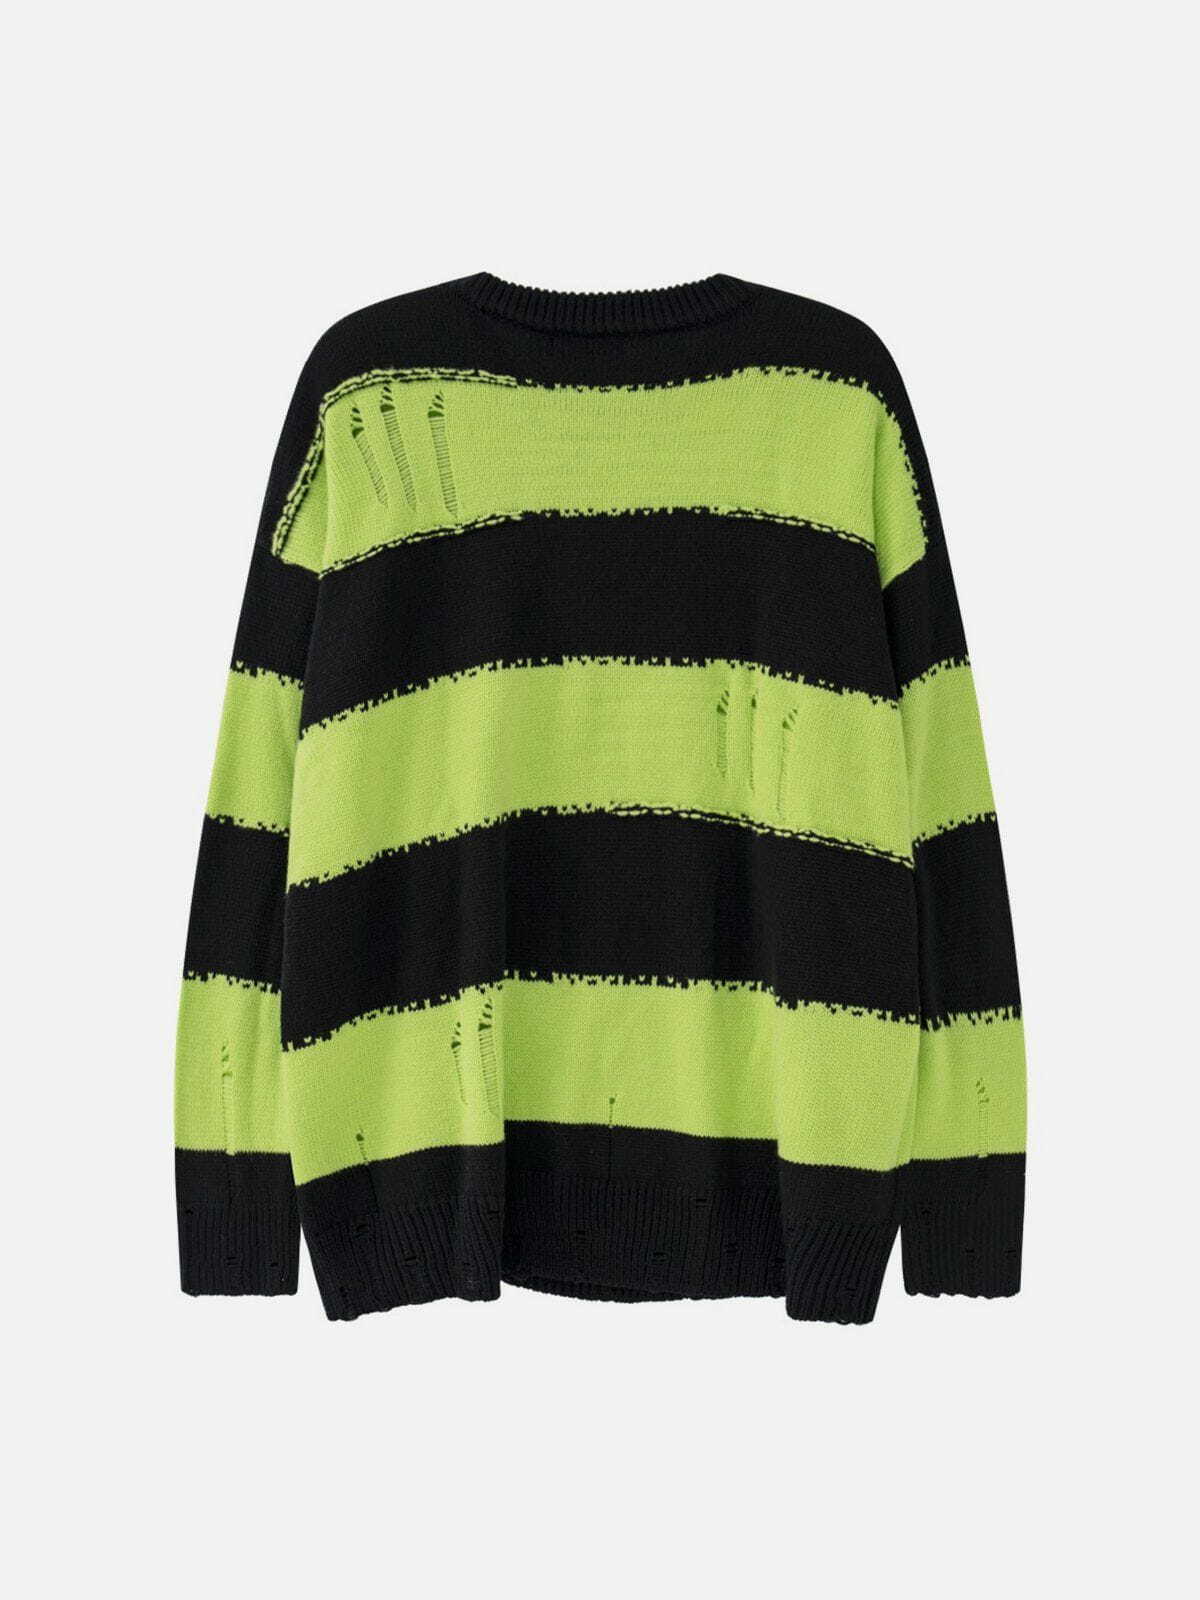 ripped jacquard sweater edgy streetwear staple 2609